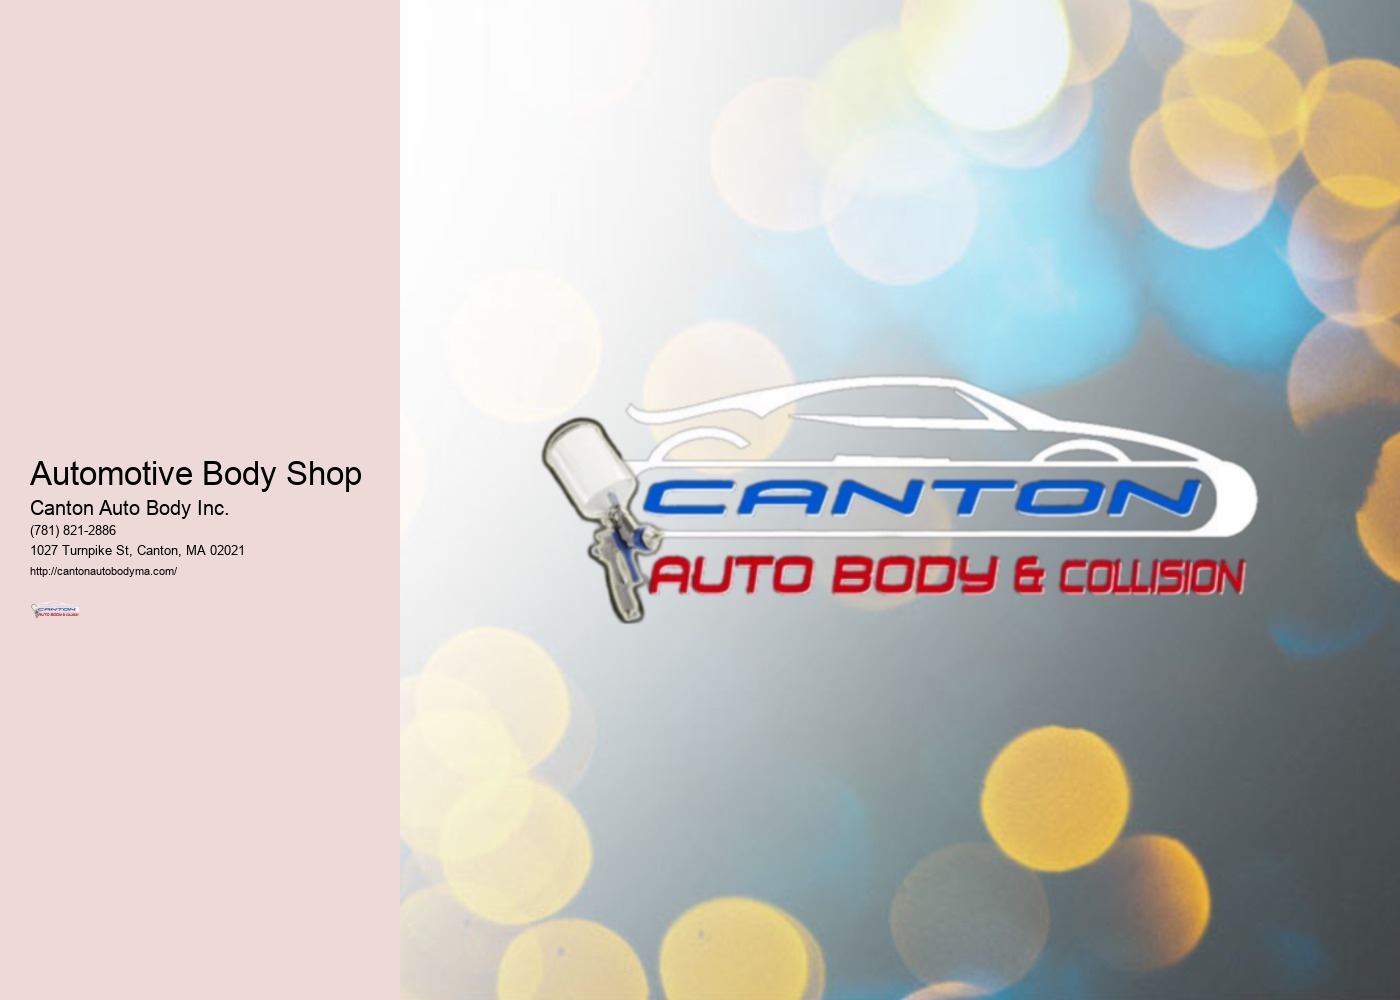 Automotive Body Shop